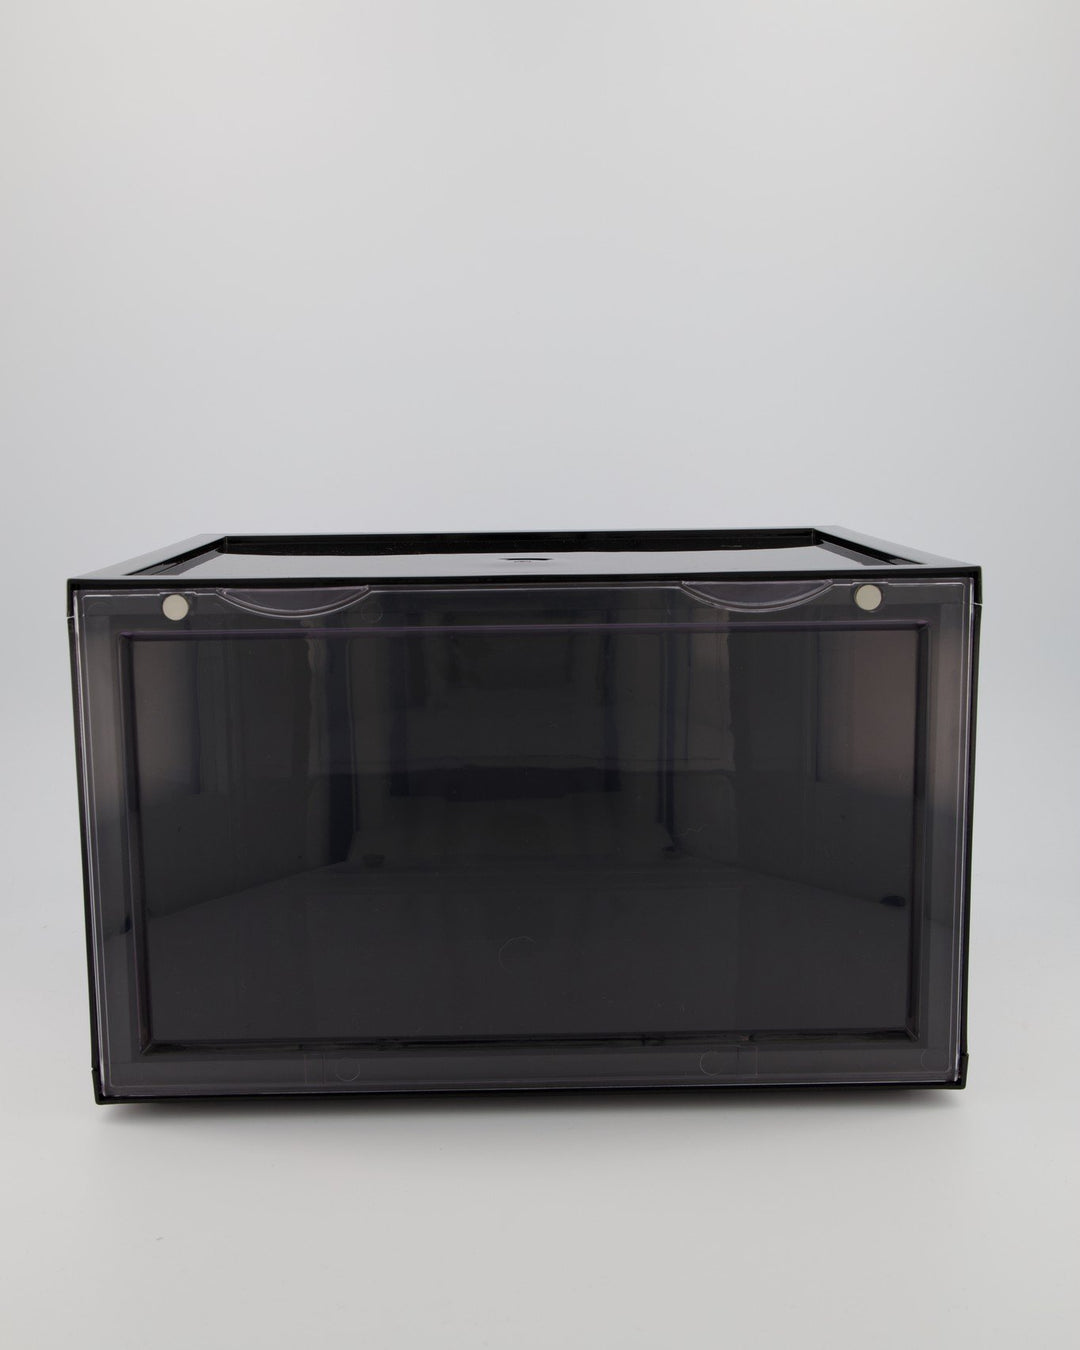 CT Sneaker Box Side Drop Display (2 Boxes) - Black